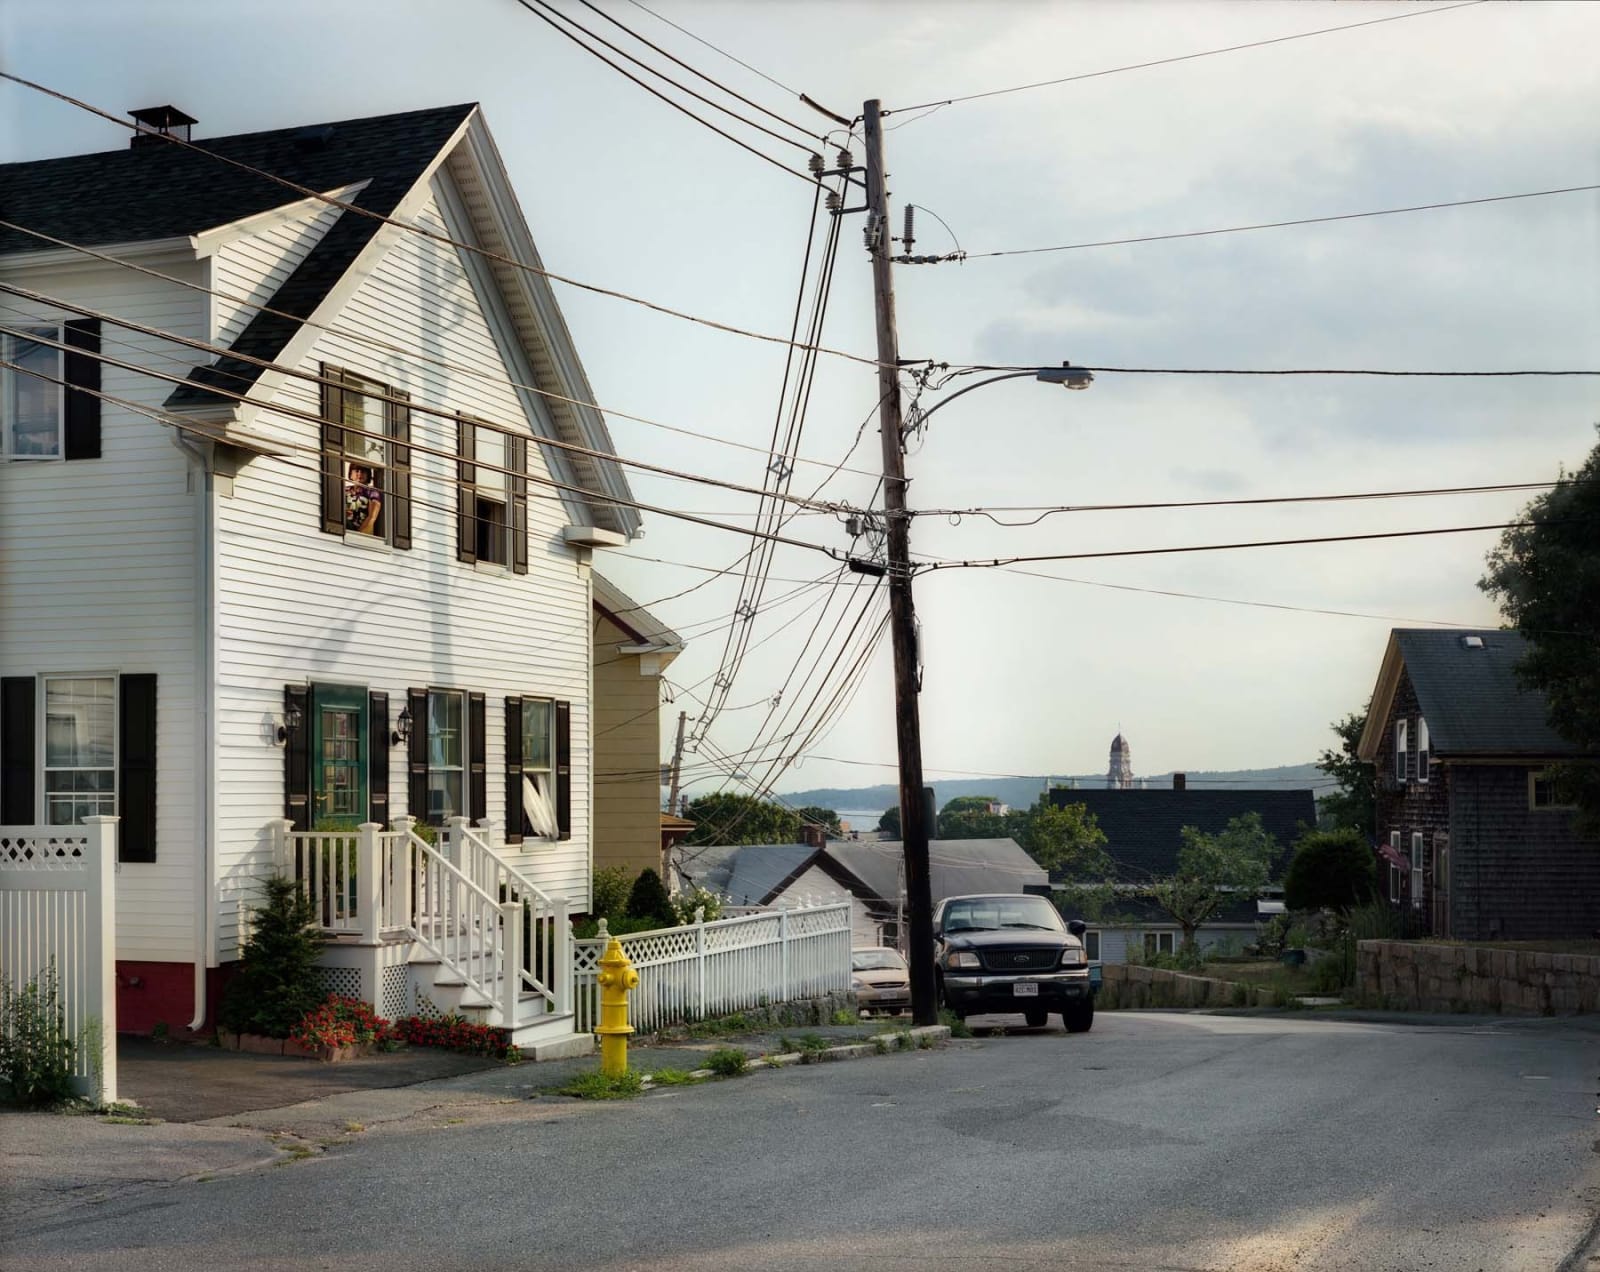 Gail Albert Halaban Edward Hopper redux revisited Adam's House, 2010 white house car telephone pole yellow fire hydrant